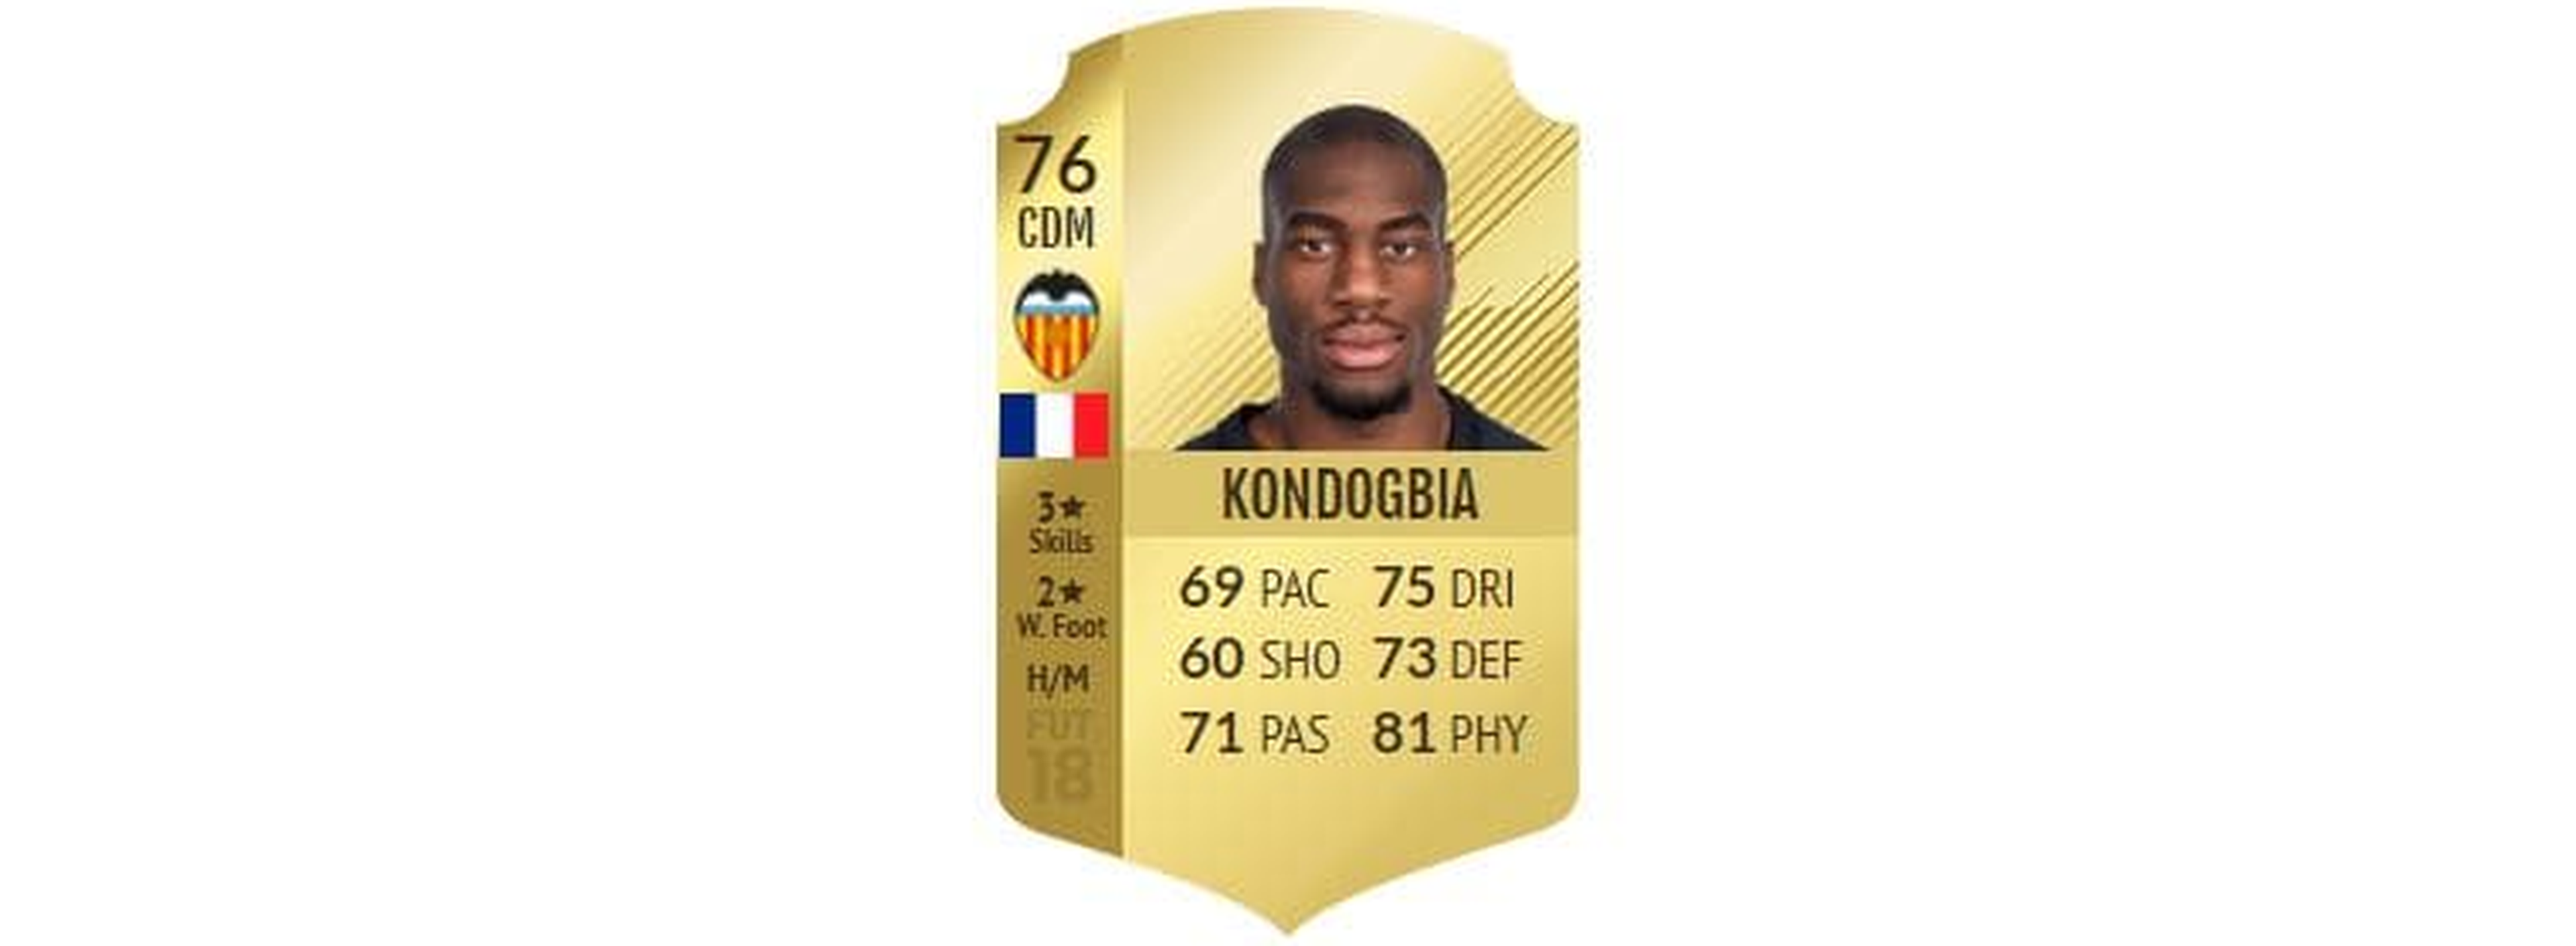 FIFA 18 - Kondogbia